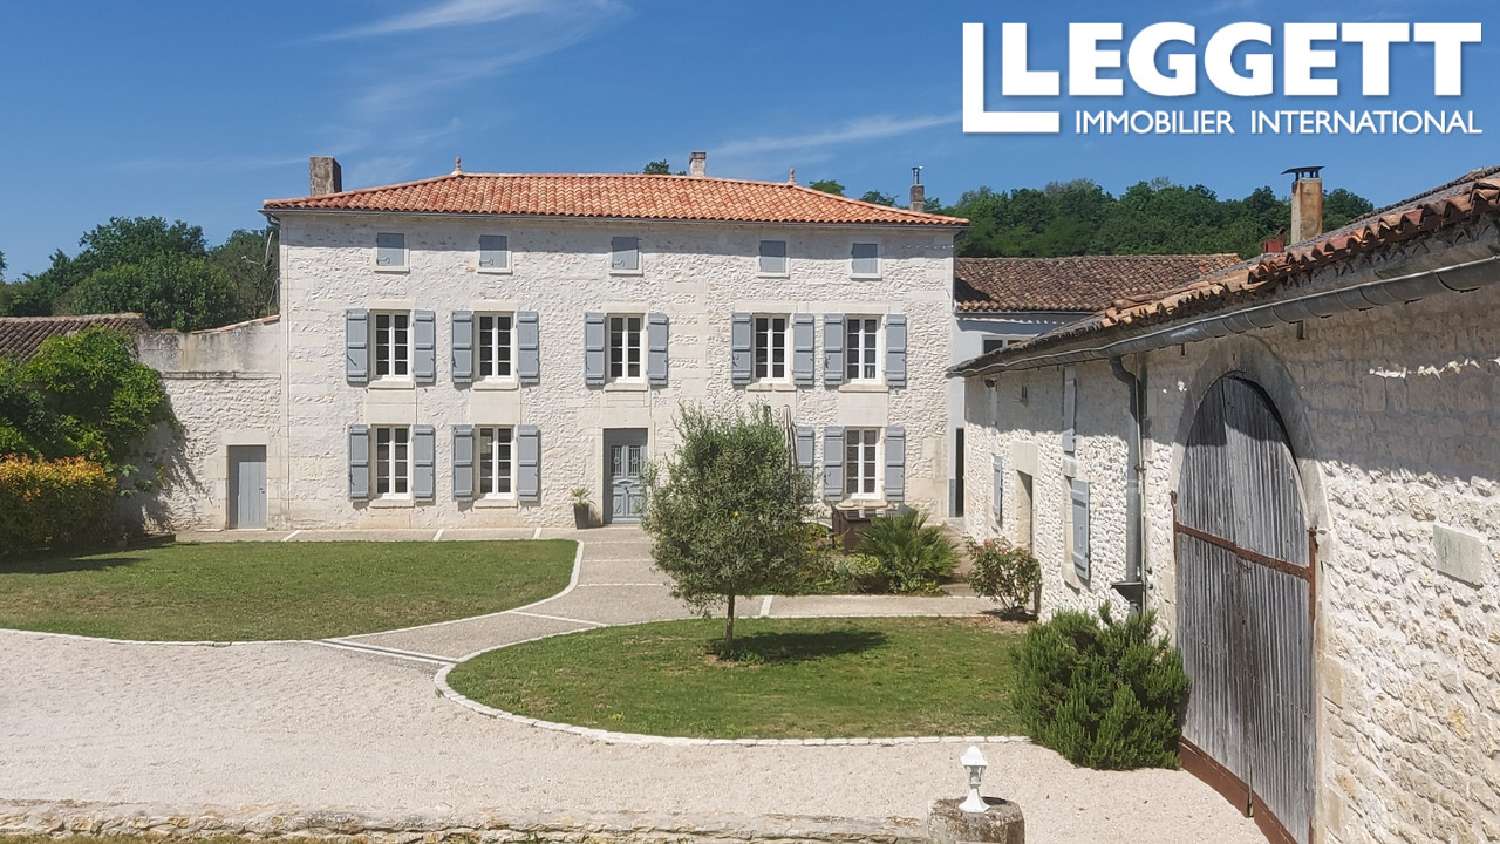  à vendre maison bourgeoise Bourg-Charente Charente 1